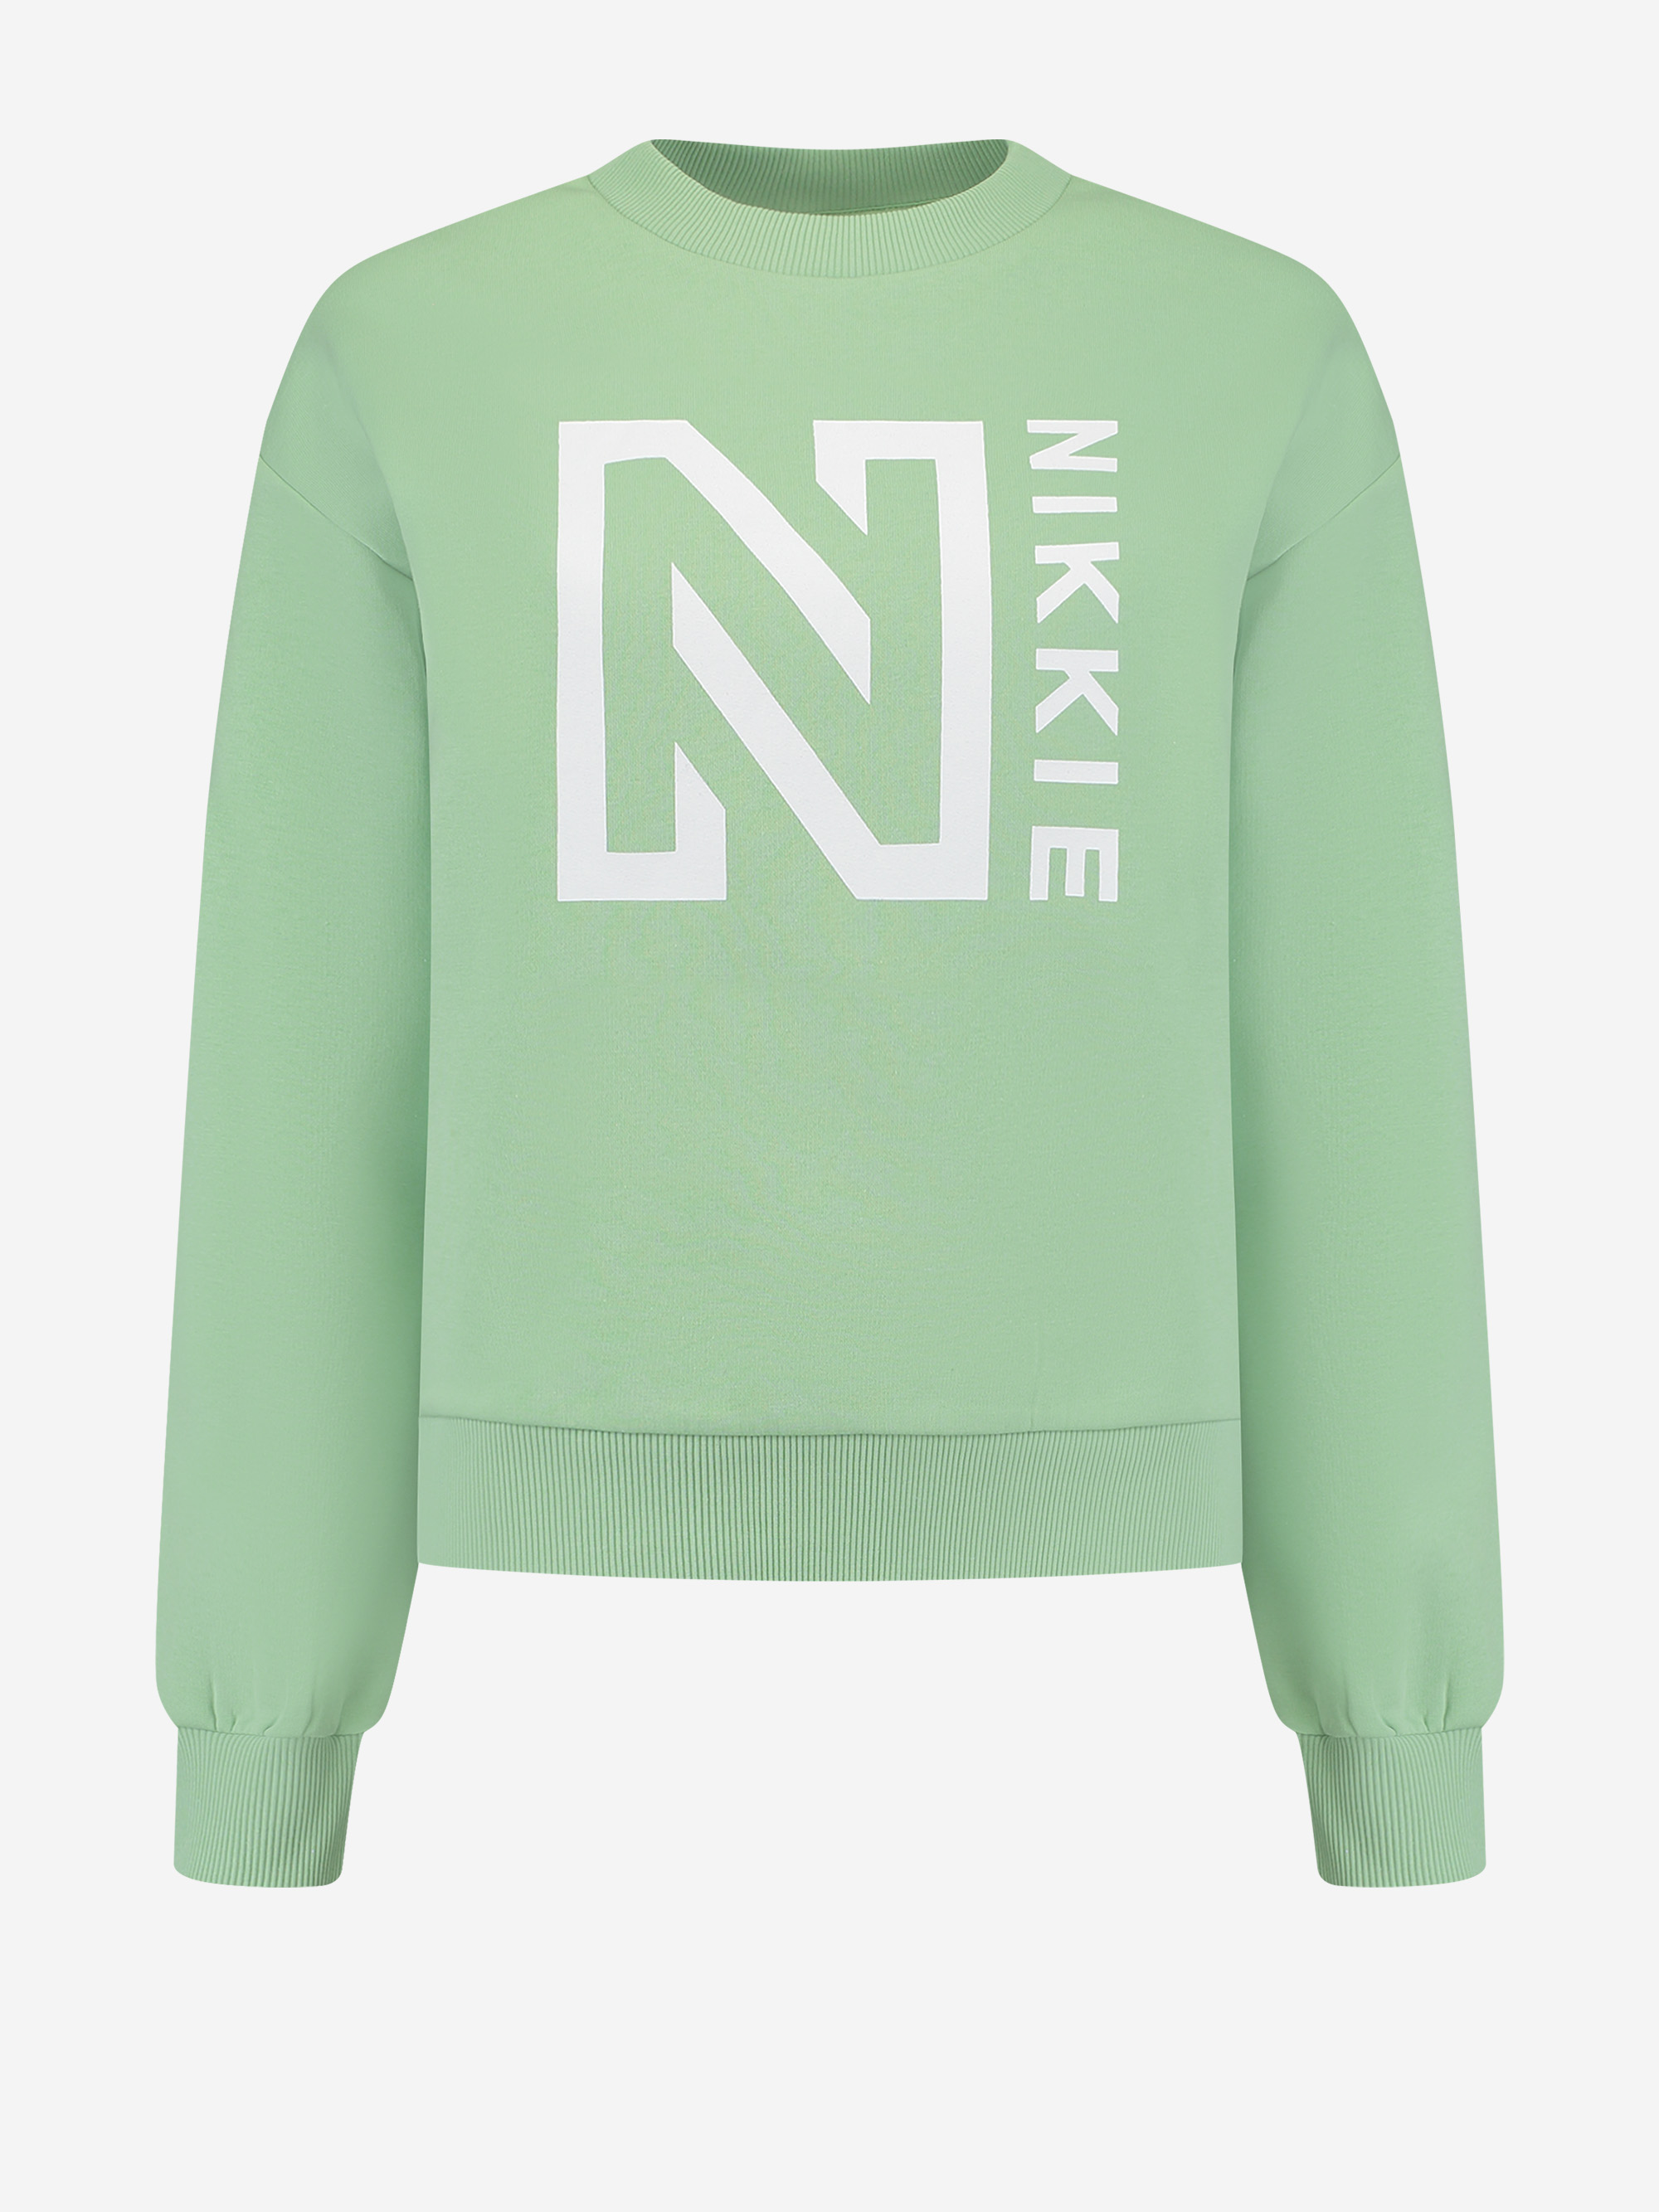 Sweater with NIKKIE logo